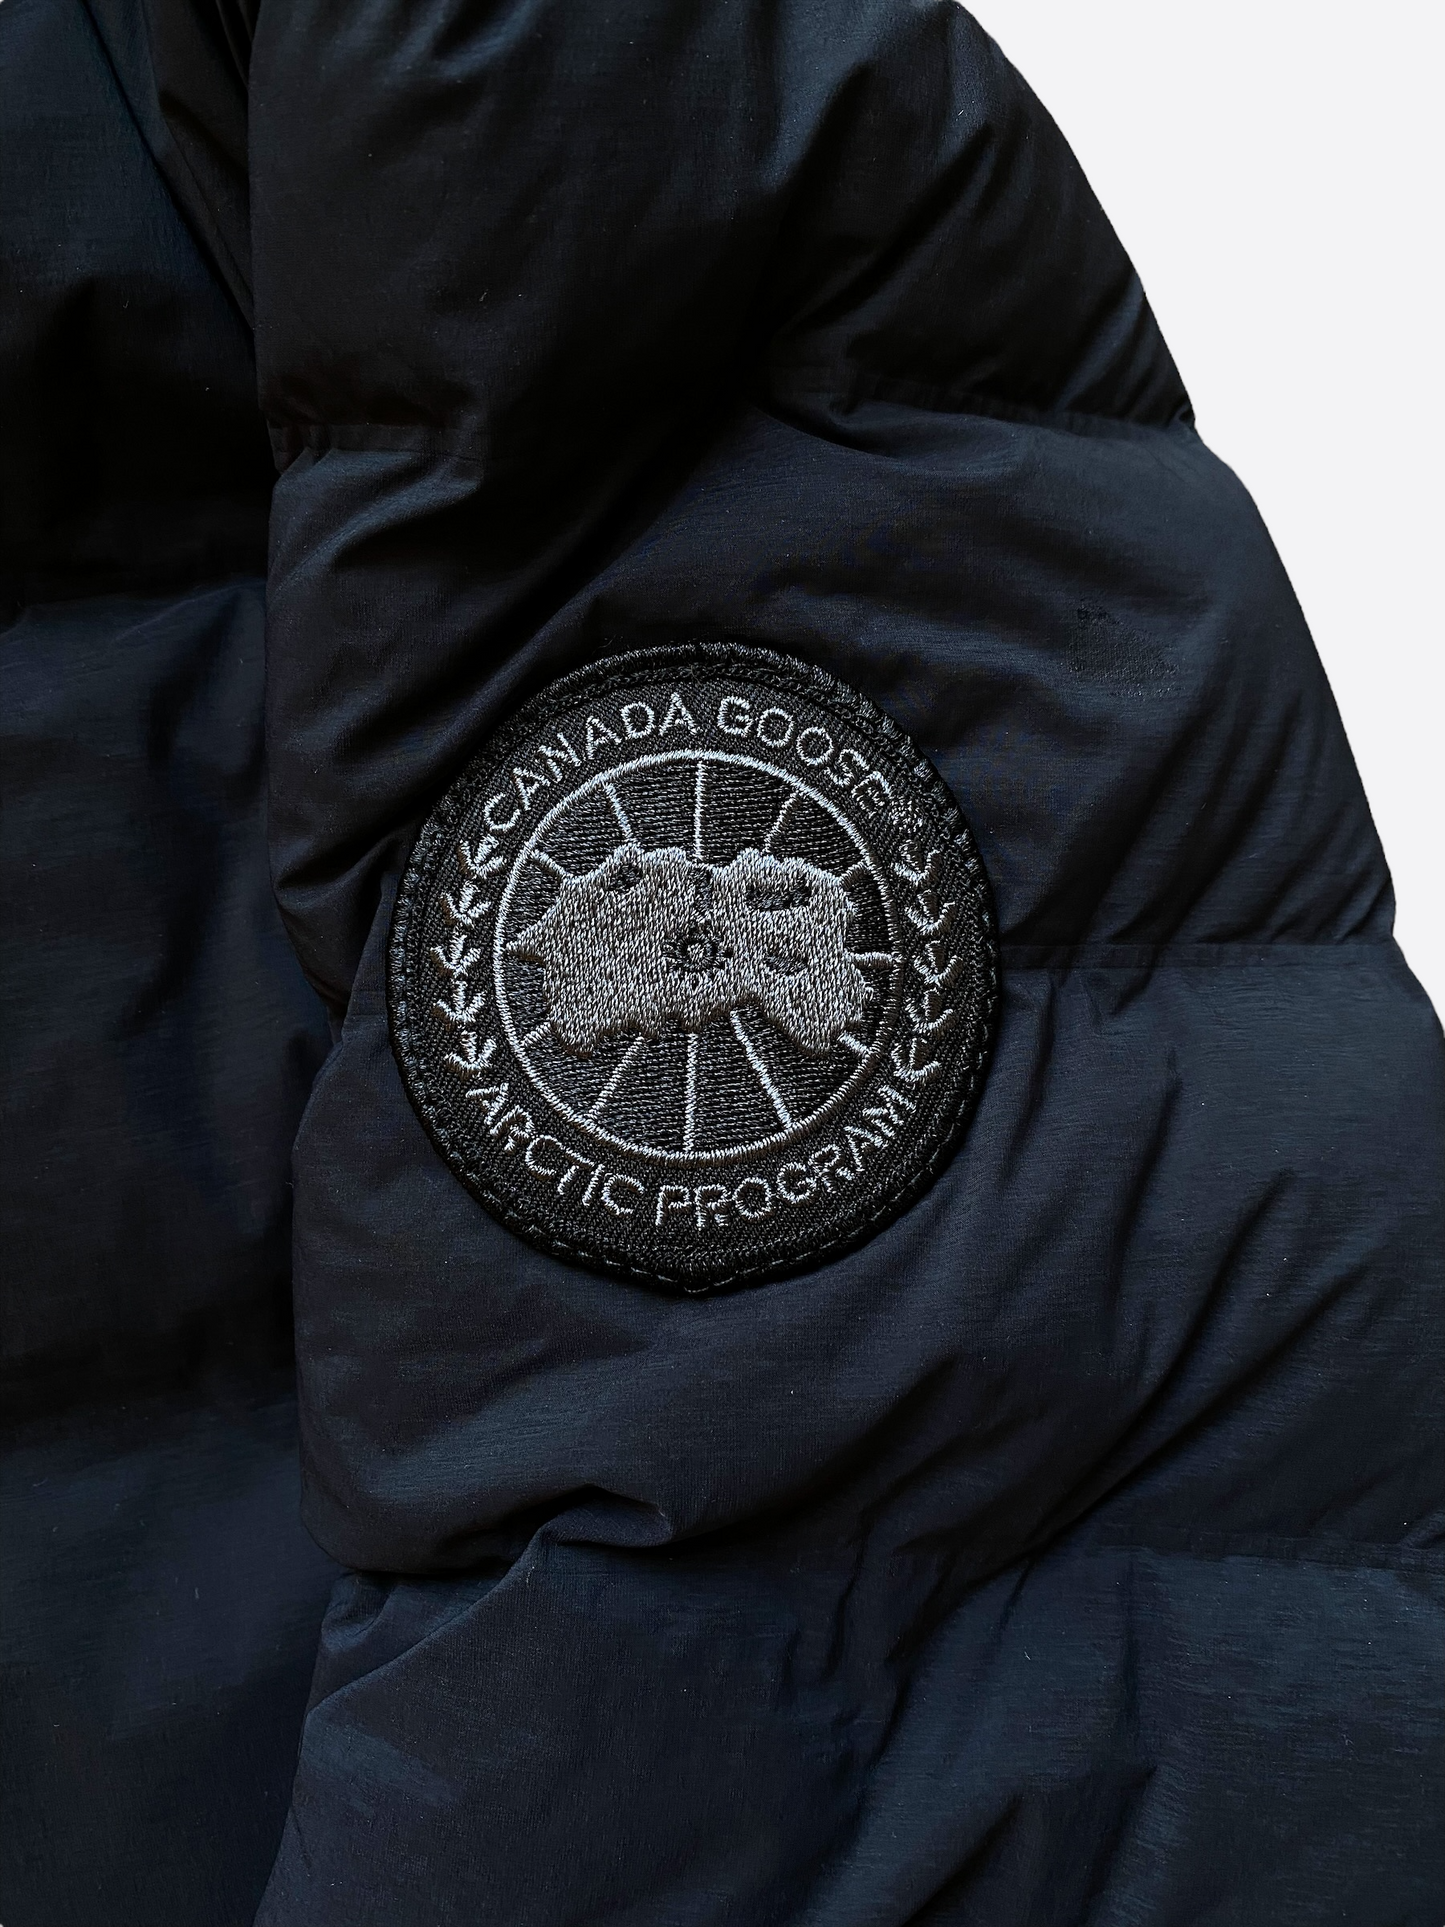 Canada Goose Black Hybridge Black Label Men's Jacket